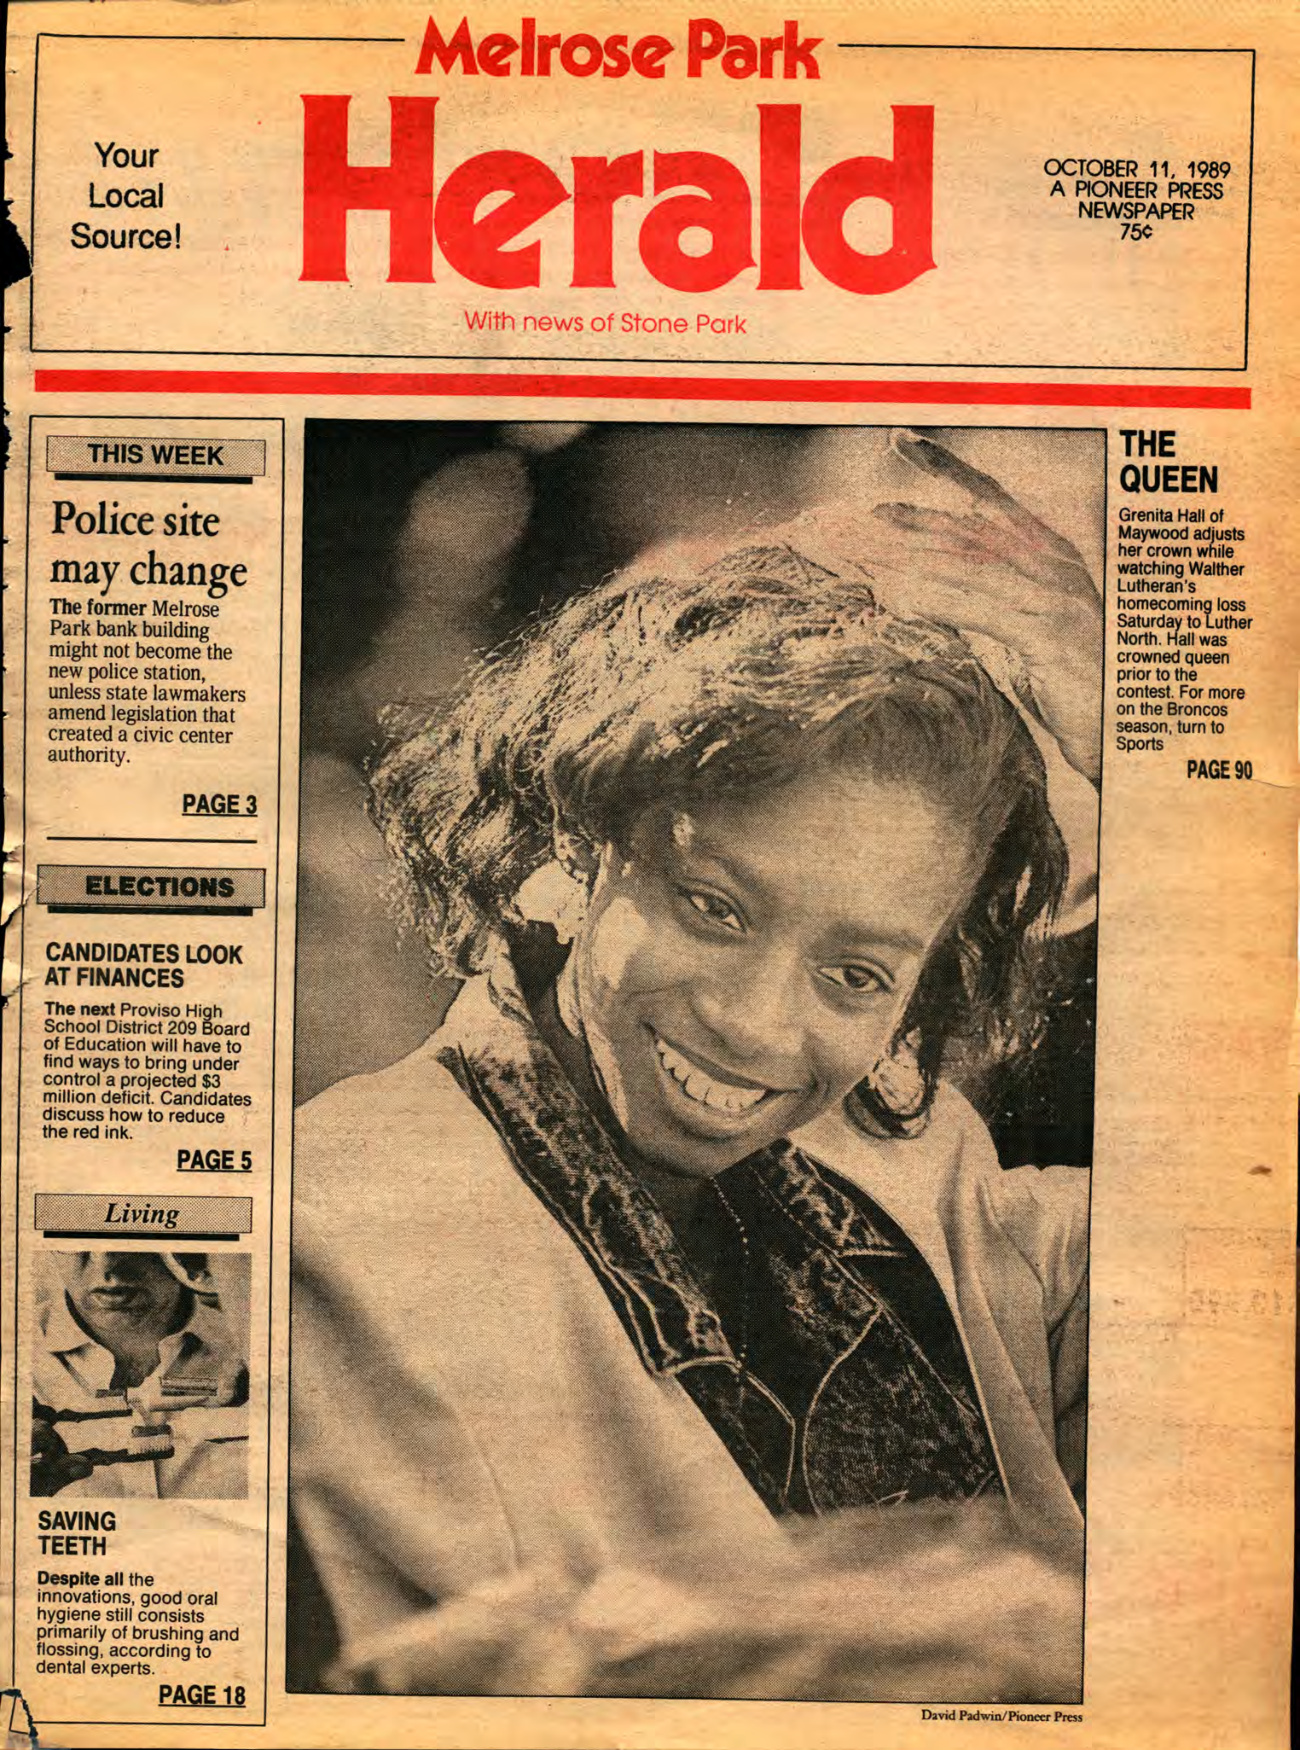 The Herald – 19891011